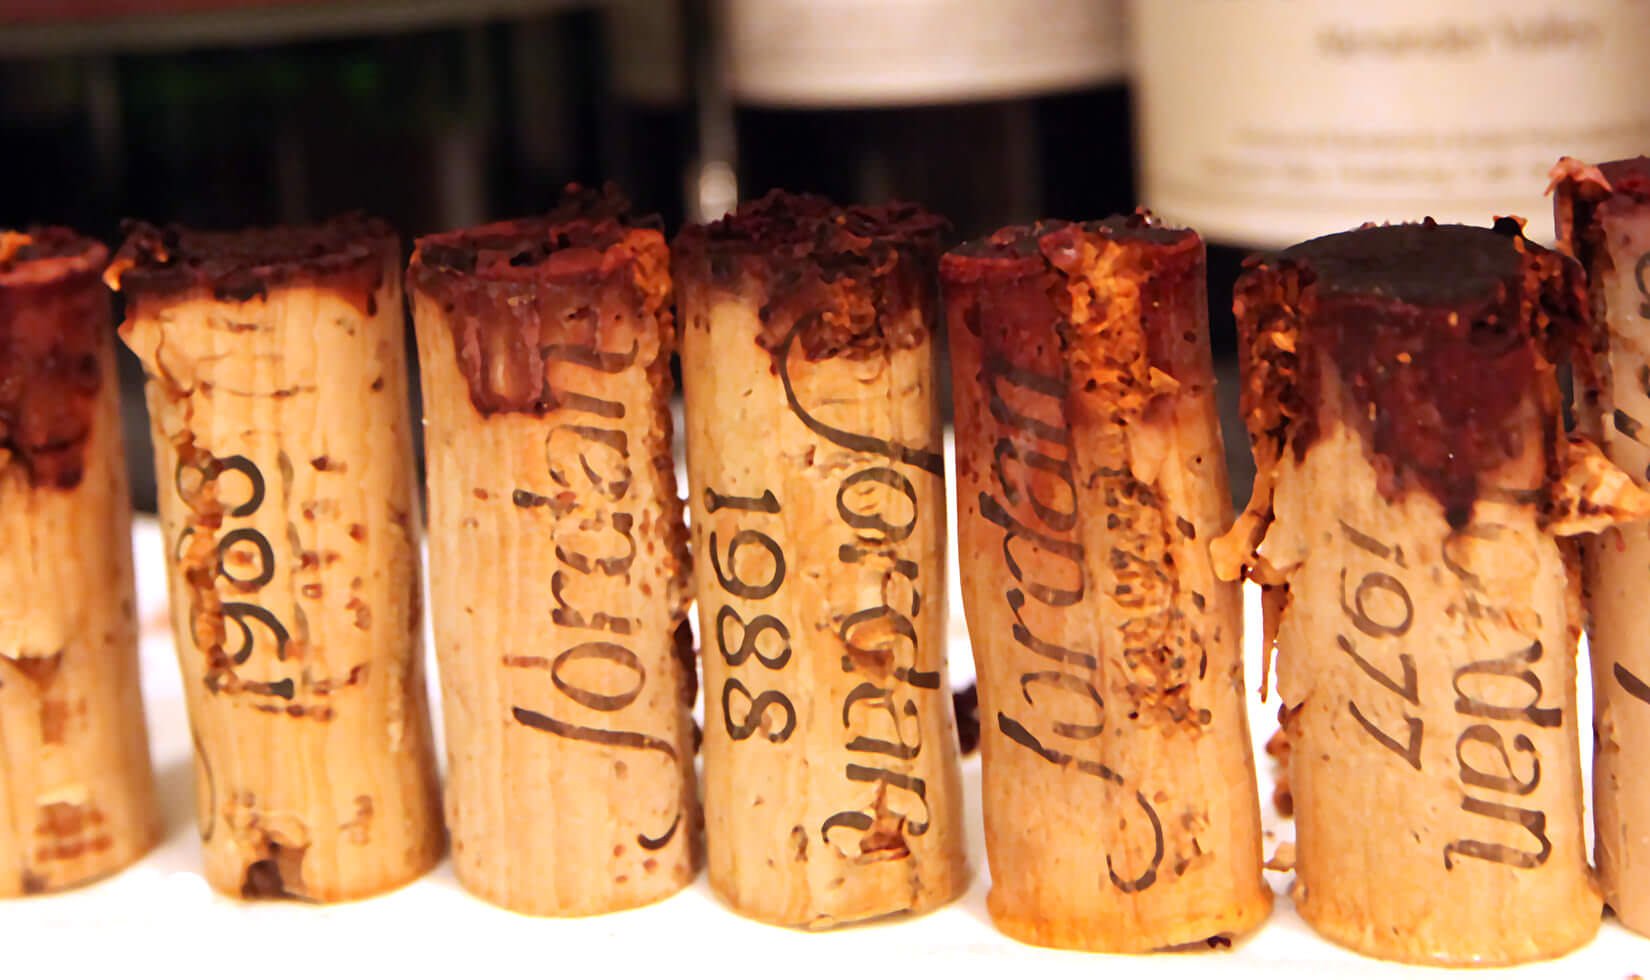 old wine corks, Jordan cabernet sauvignon wine corks line